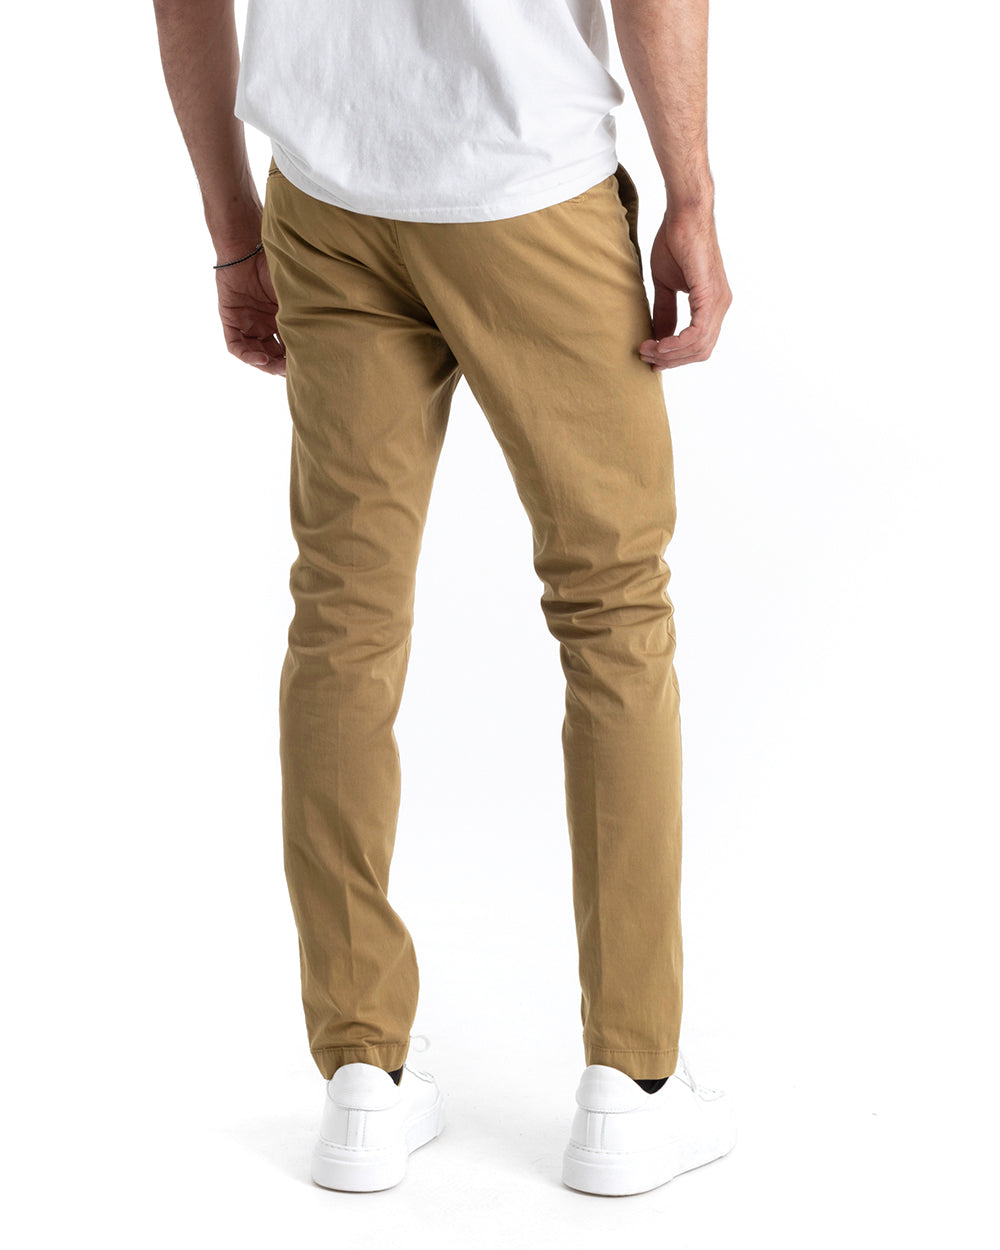 Pantaloni Uomo Cotone Tasca America Chinos Sartoriale Slim Fit Casual Camel GIOSAL-P5698A